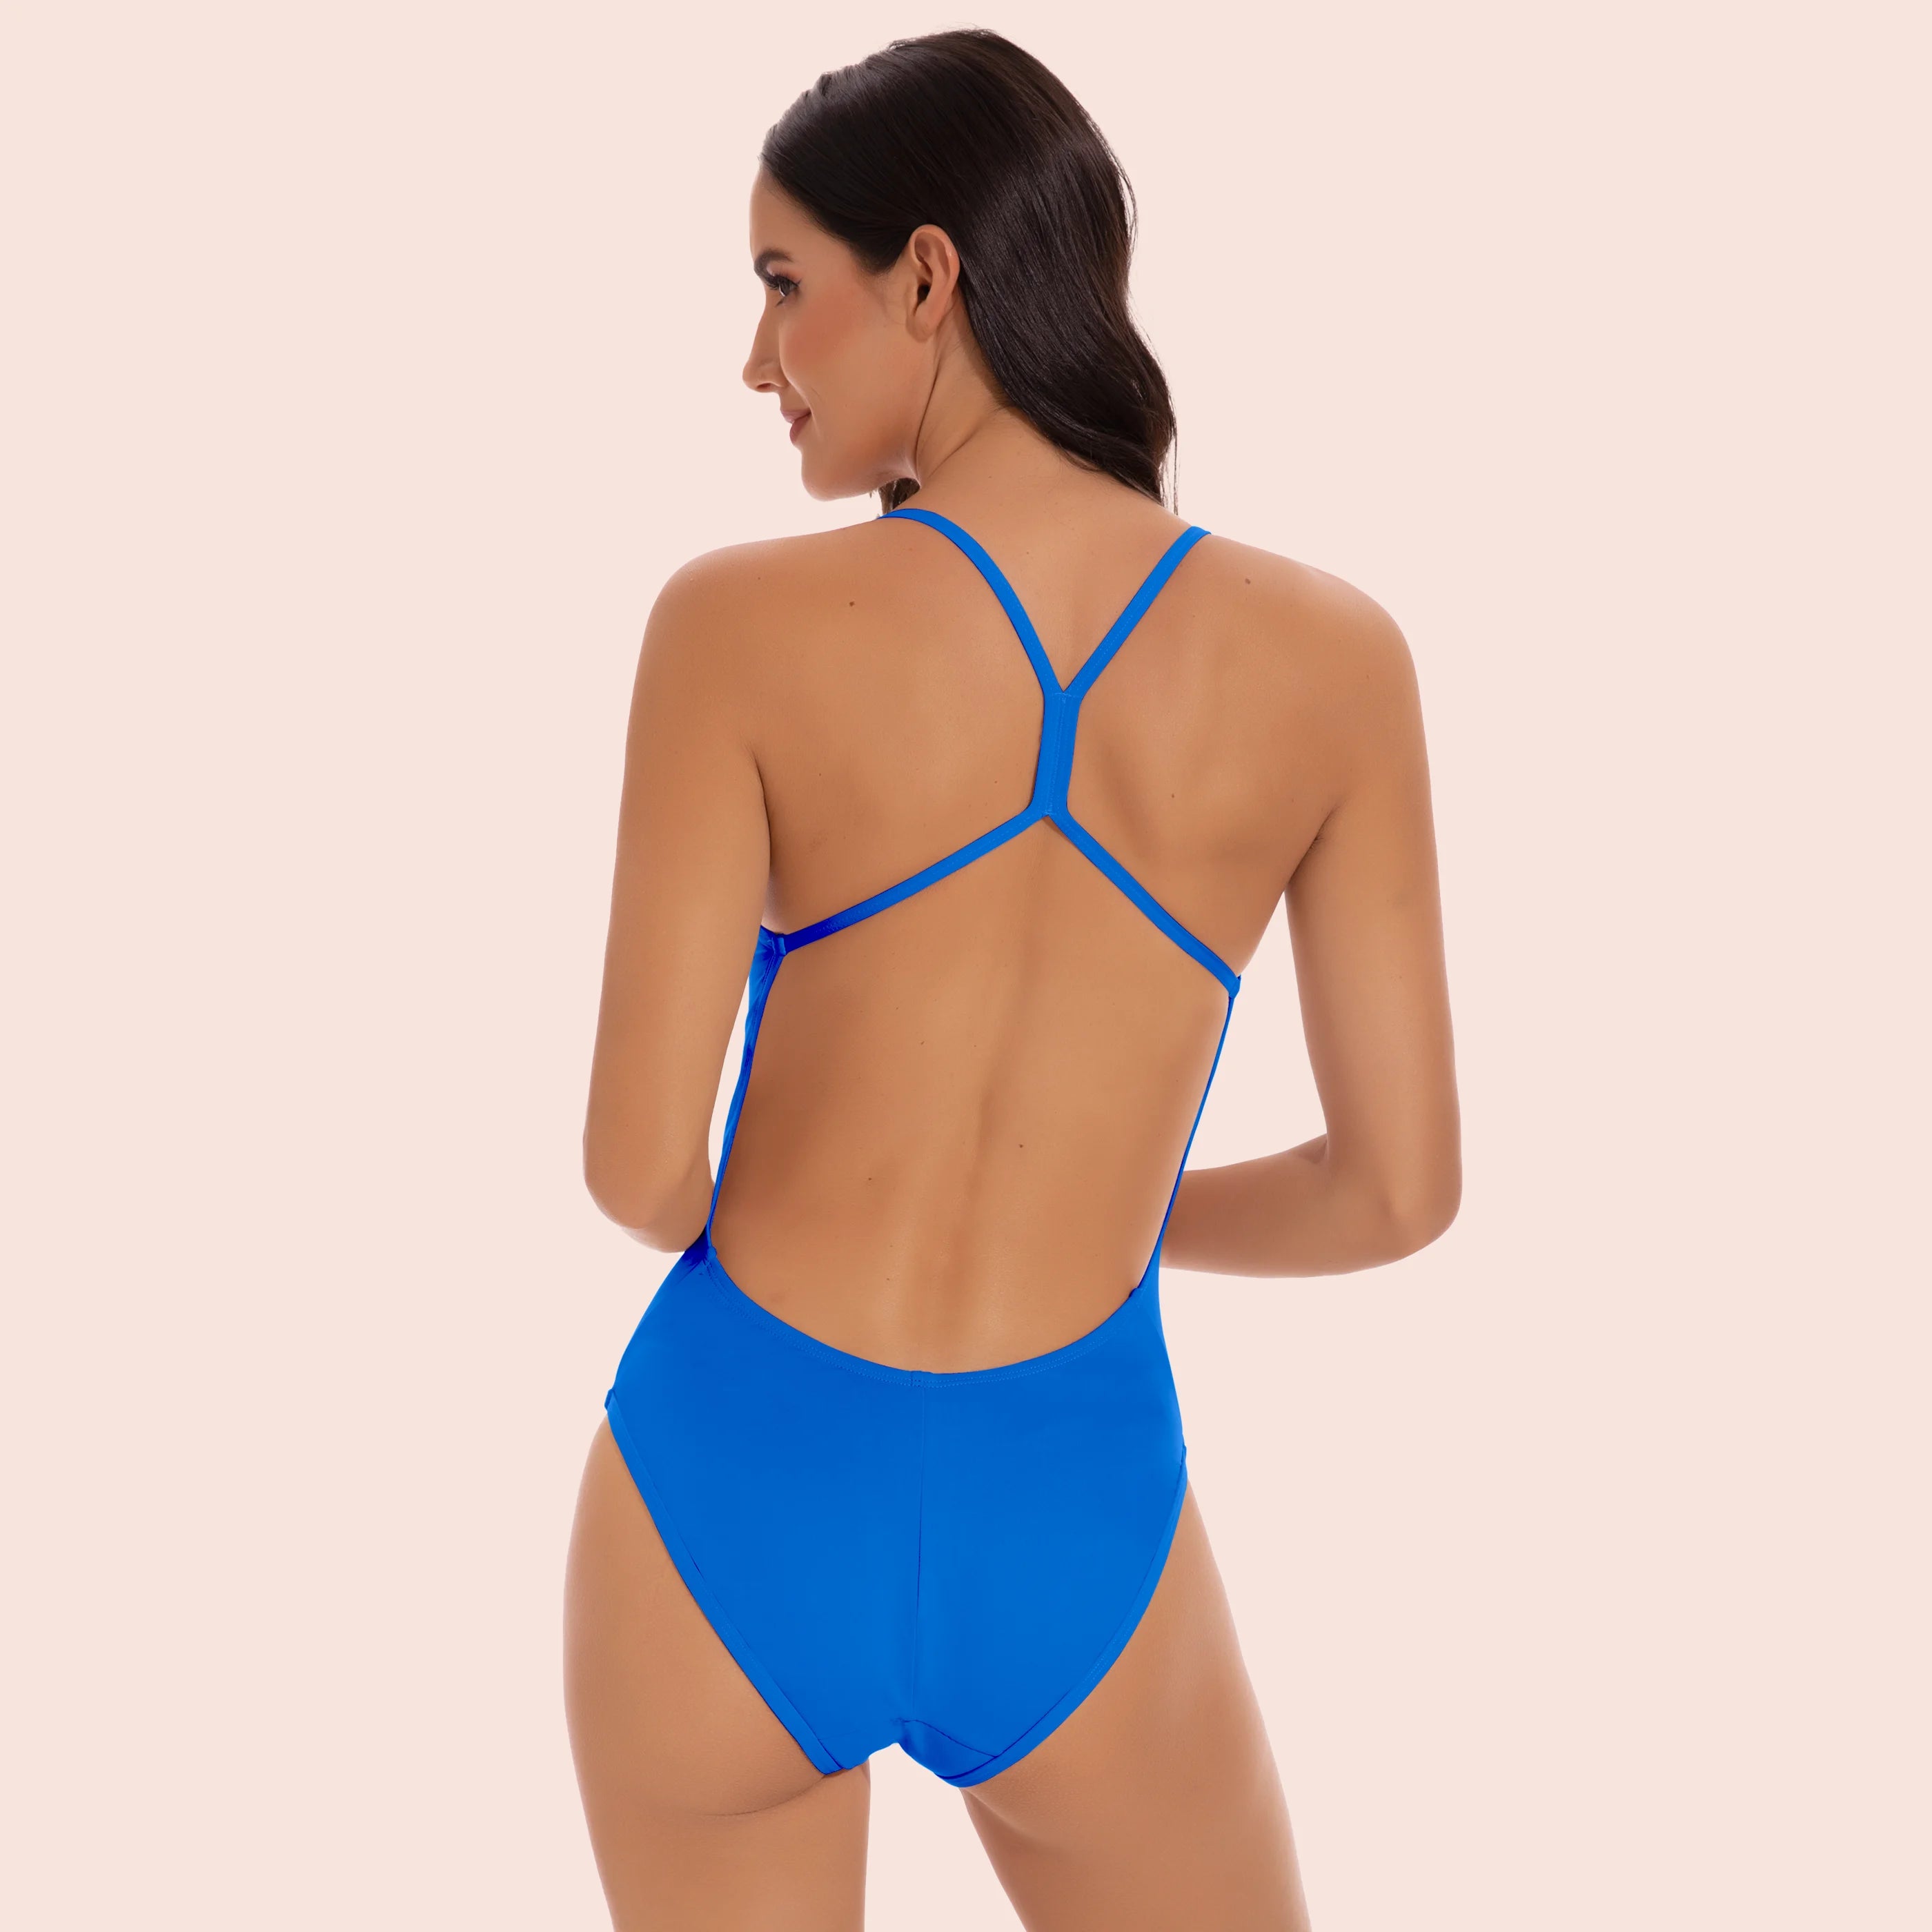 Beautikini Period Swimwear One Piece Swimsuit Racerback Training Bathing Suit